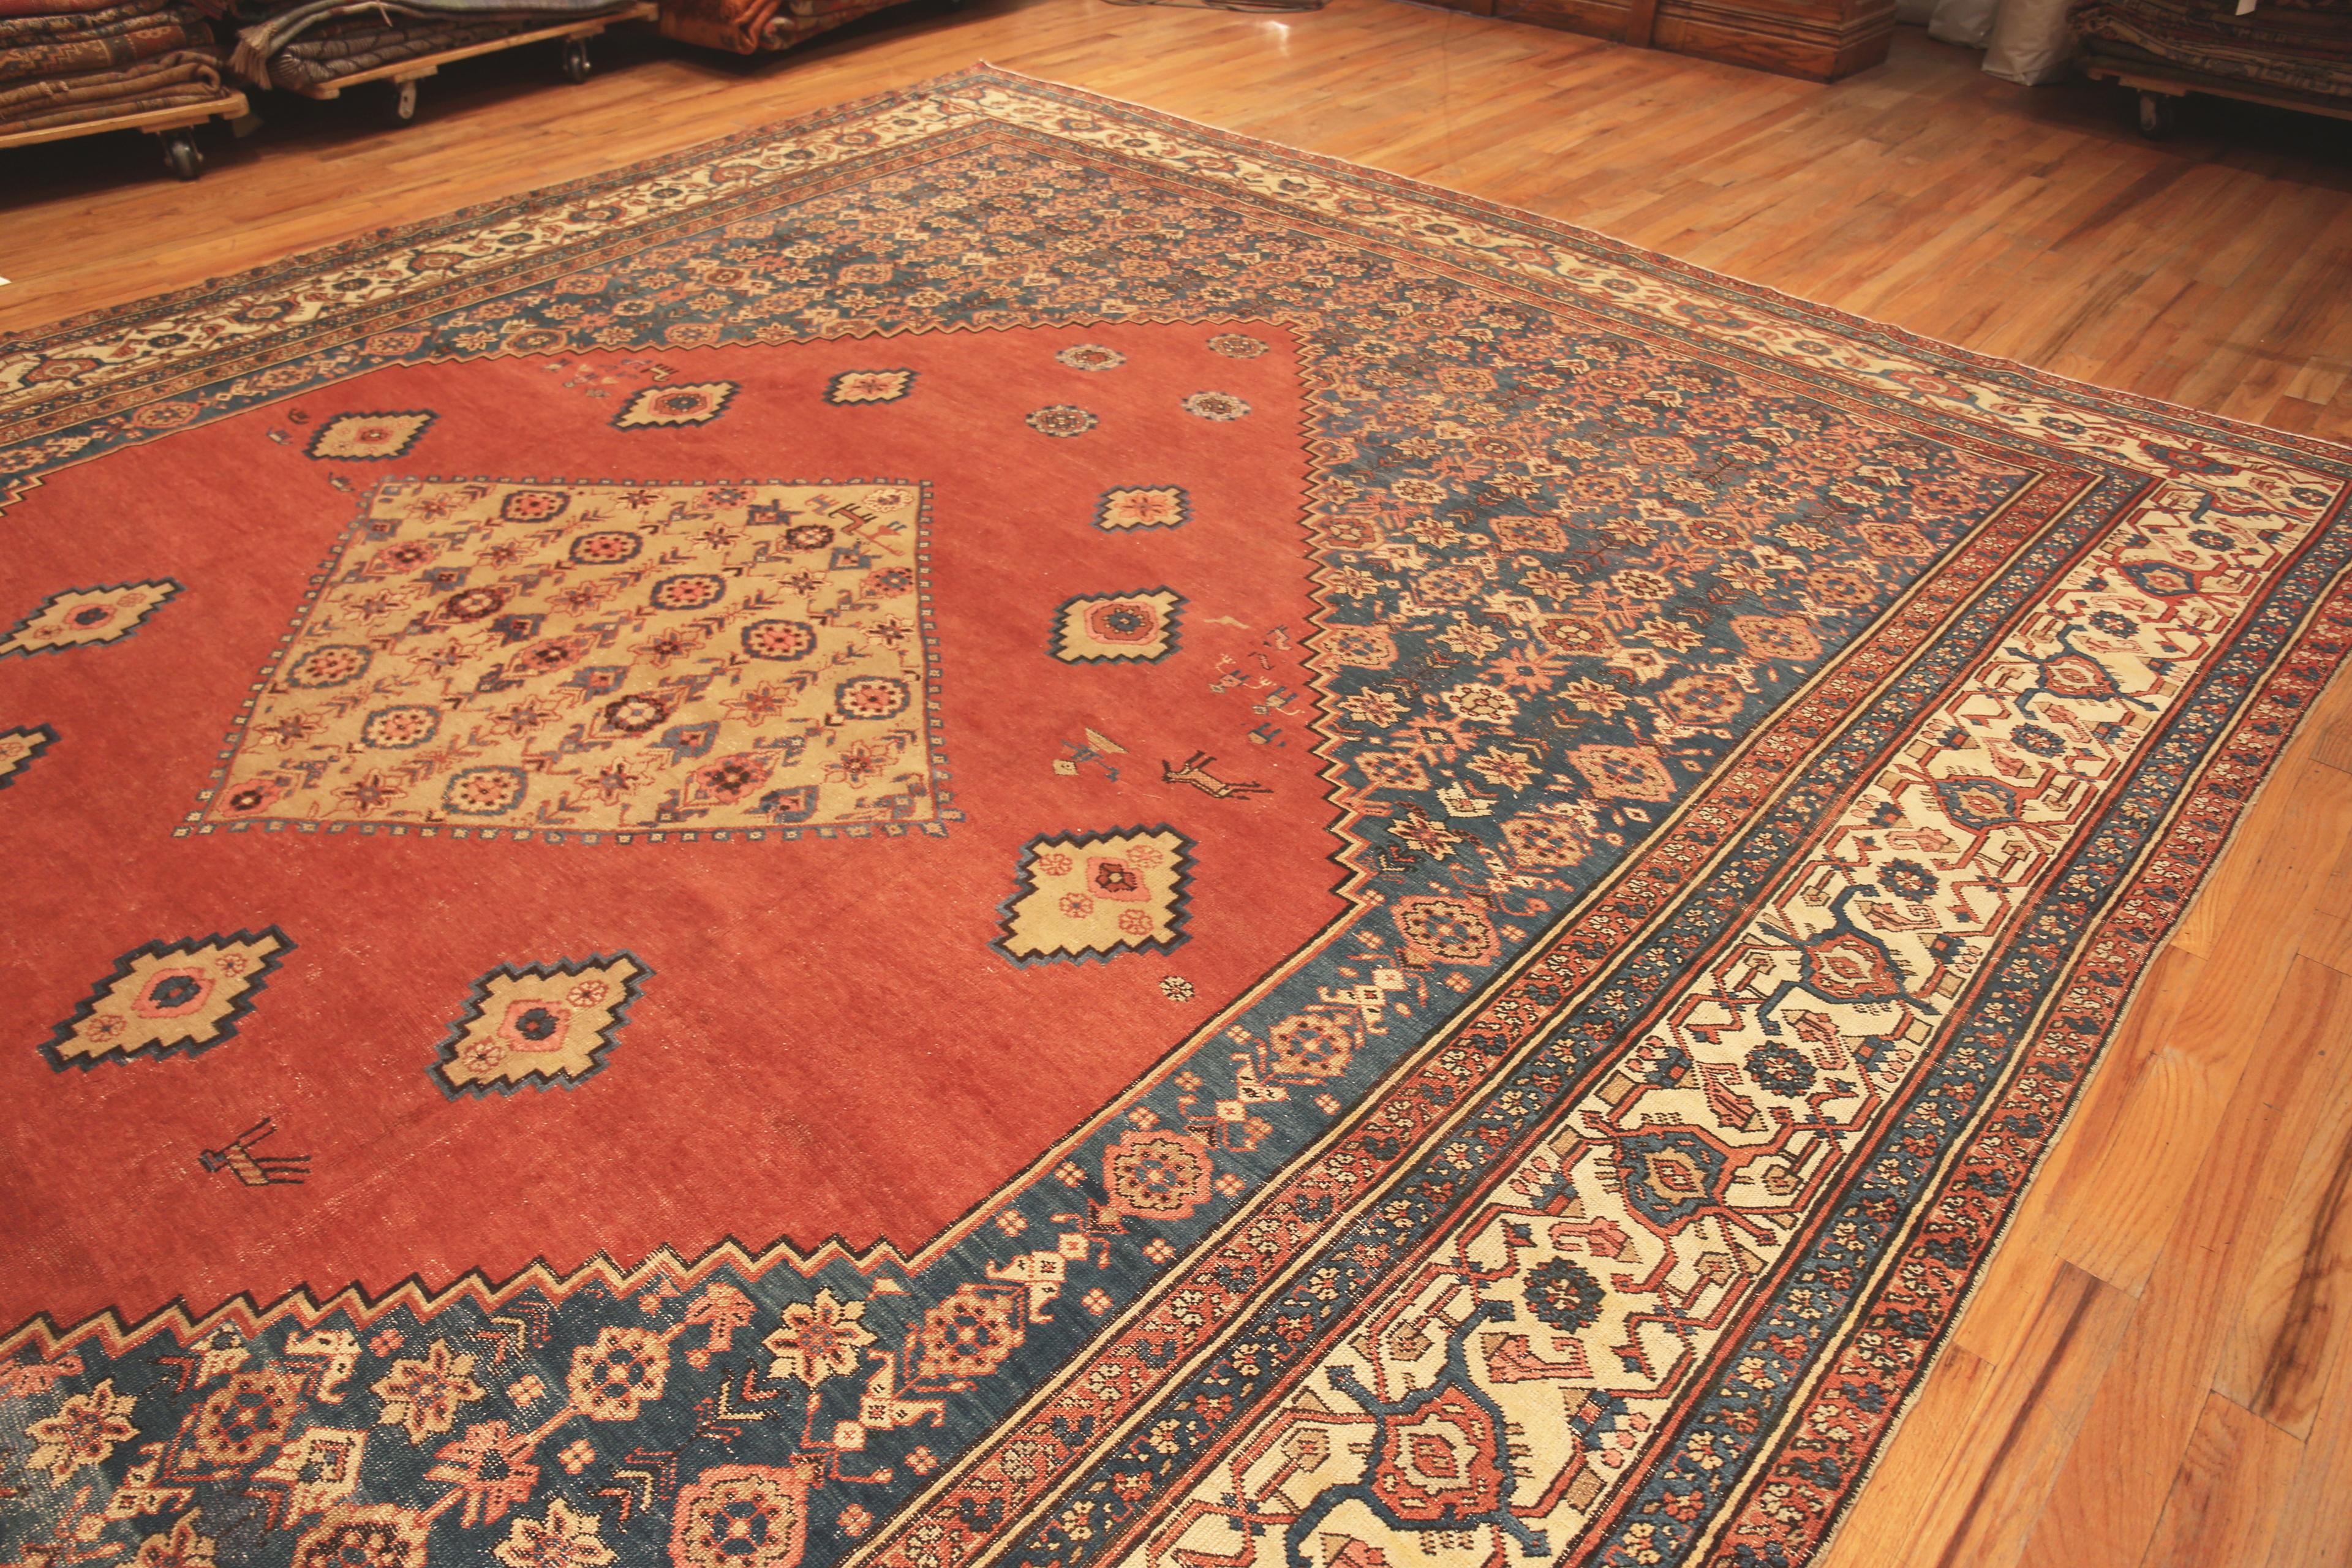 Grand tapis persan Bakshaish, Pays d'origine / type de tapis : Tapis persan, Circa date : 1880. Taille : 13 ft 7 in x 18 ft (4,14 m x 5,49 m)


